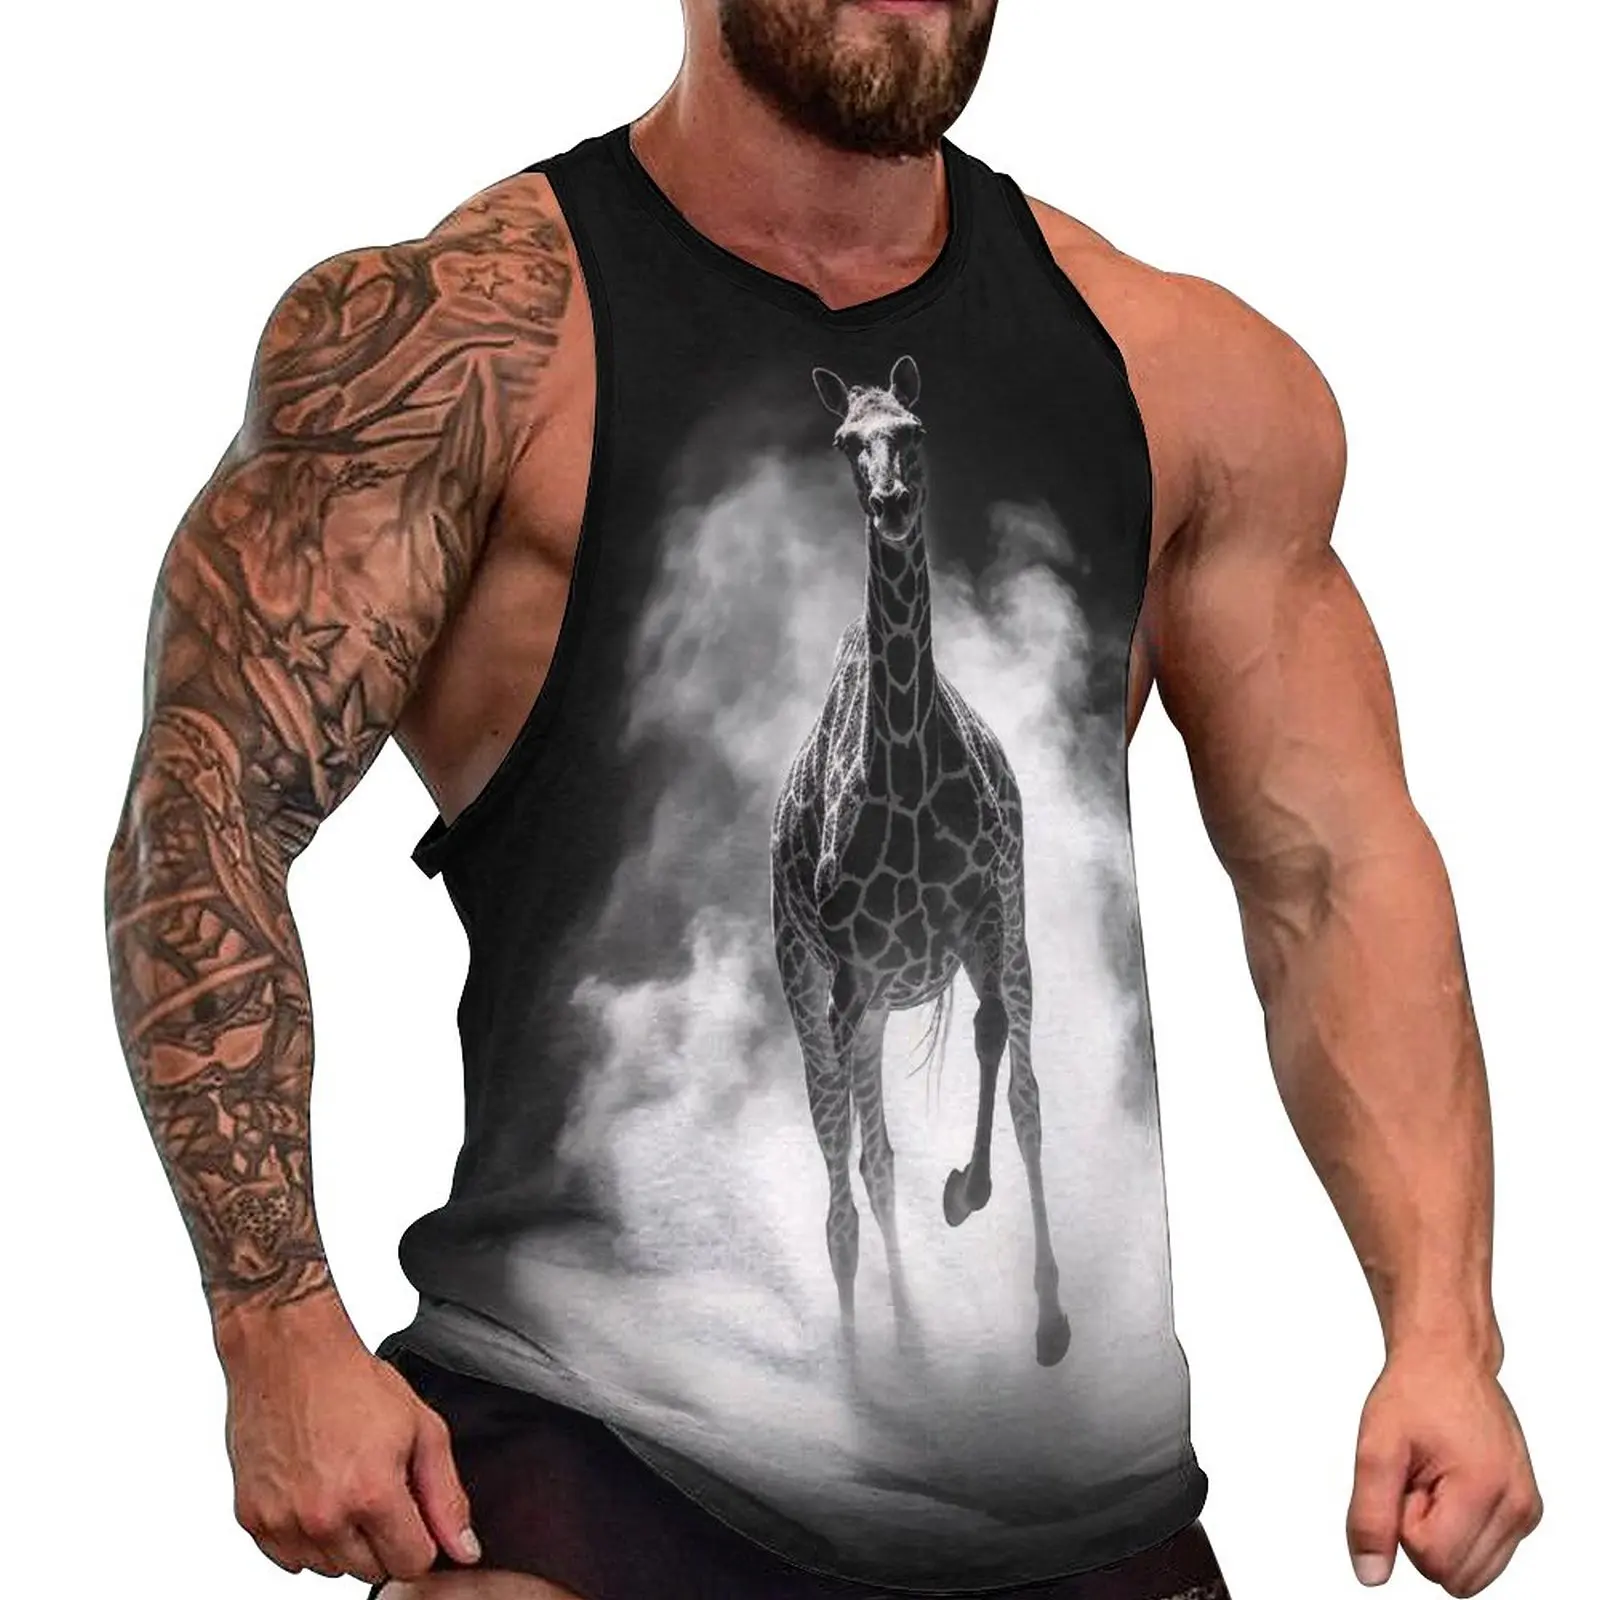 

Giraffe Summer Tank Top Light Sketch White Powder Bodybuilding Tops Man's Graphic Muscle Sleeveless Vests Plus Size 4XL 5XL